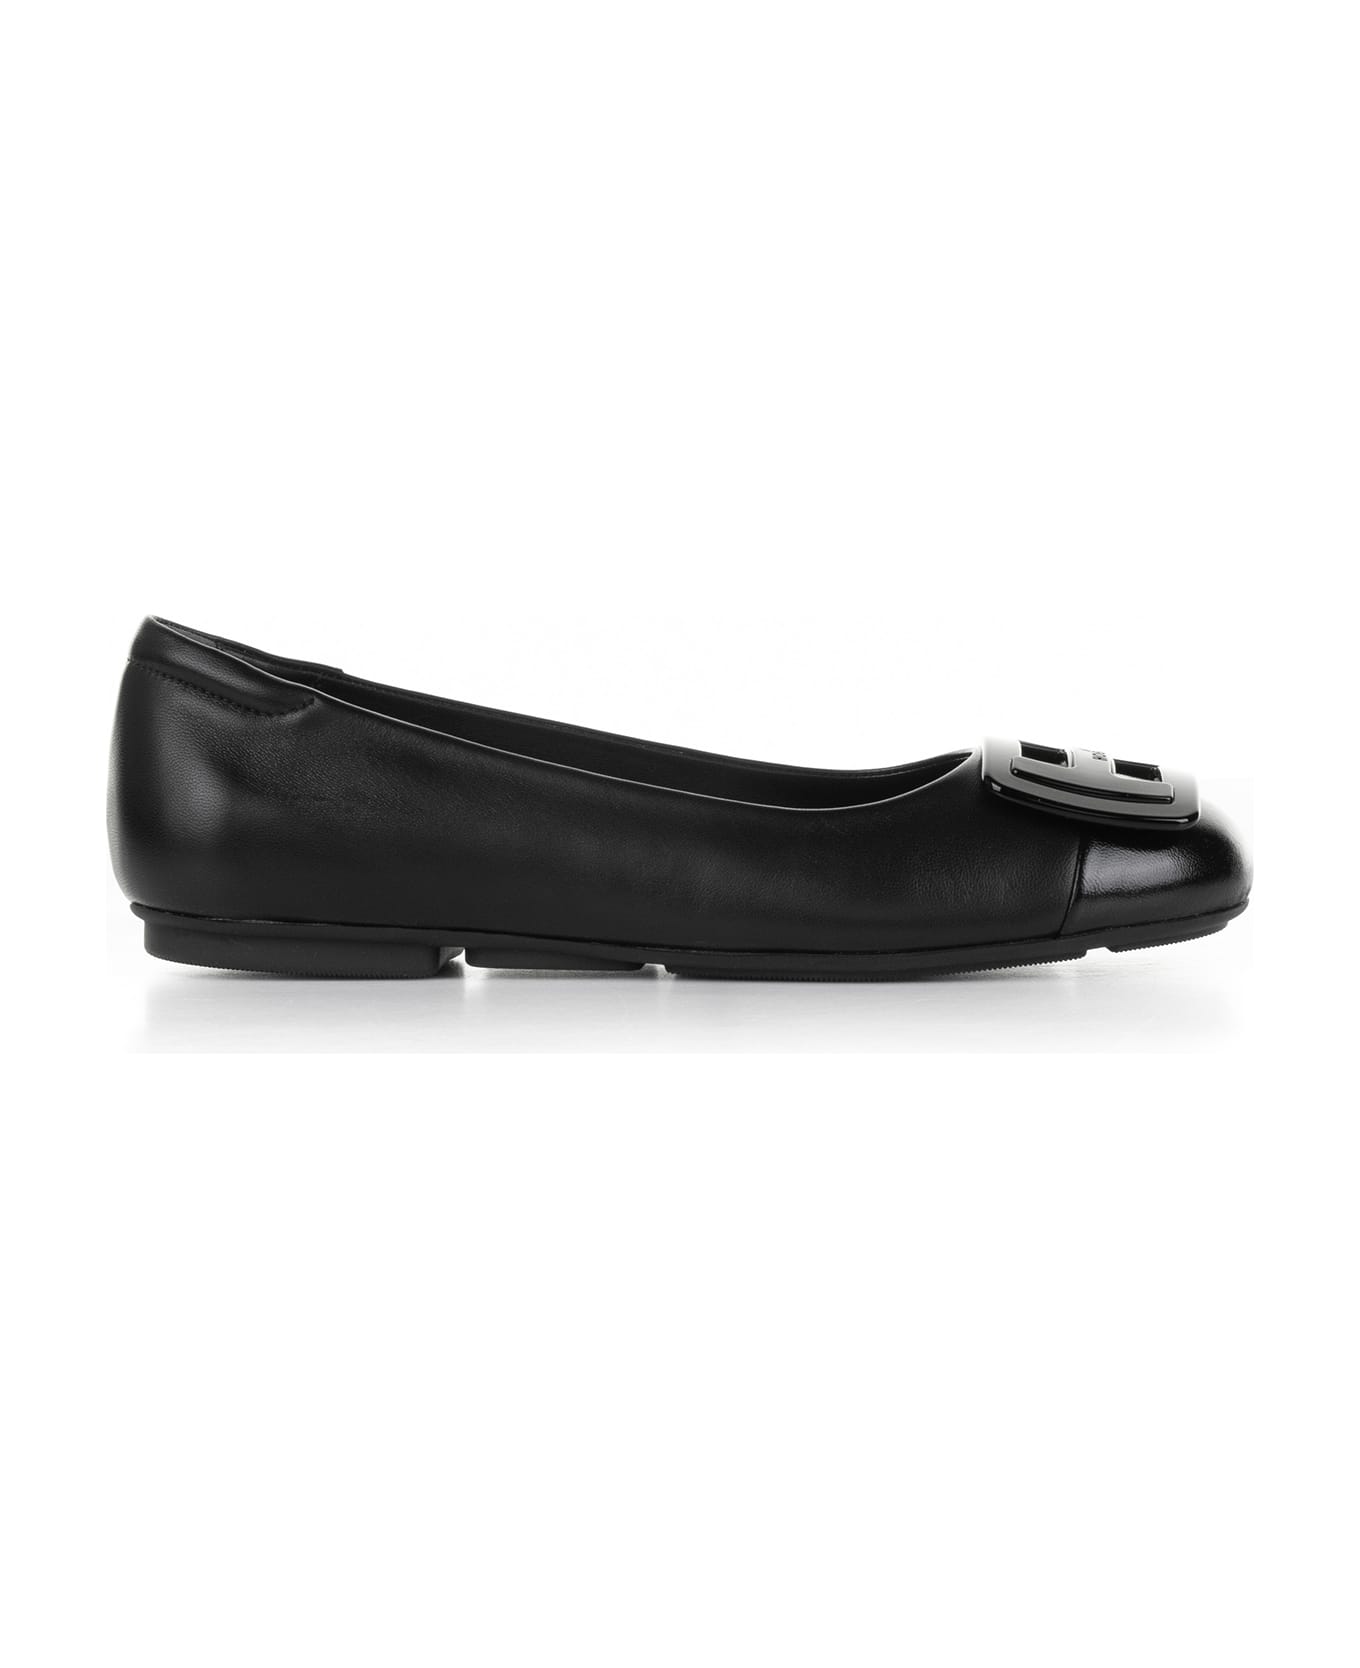 Hogan H661 Patent Leather Ballet Flats - Black